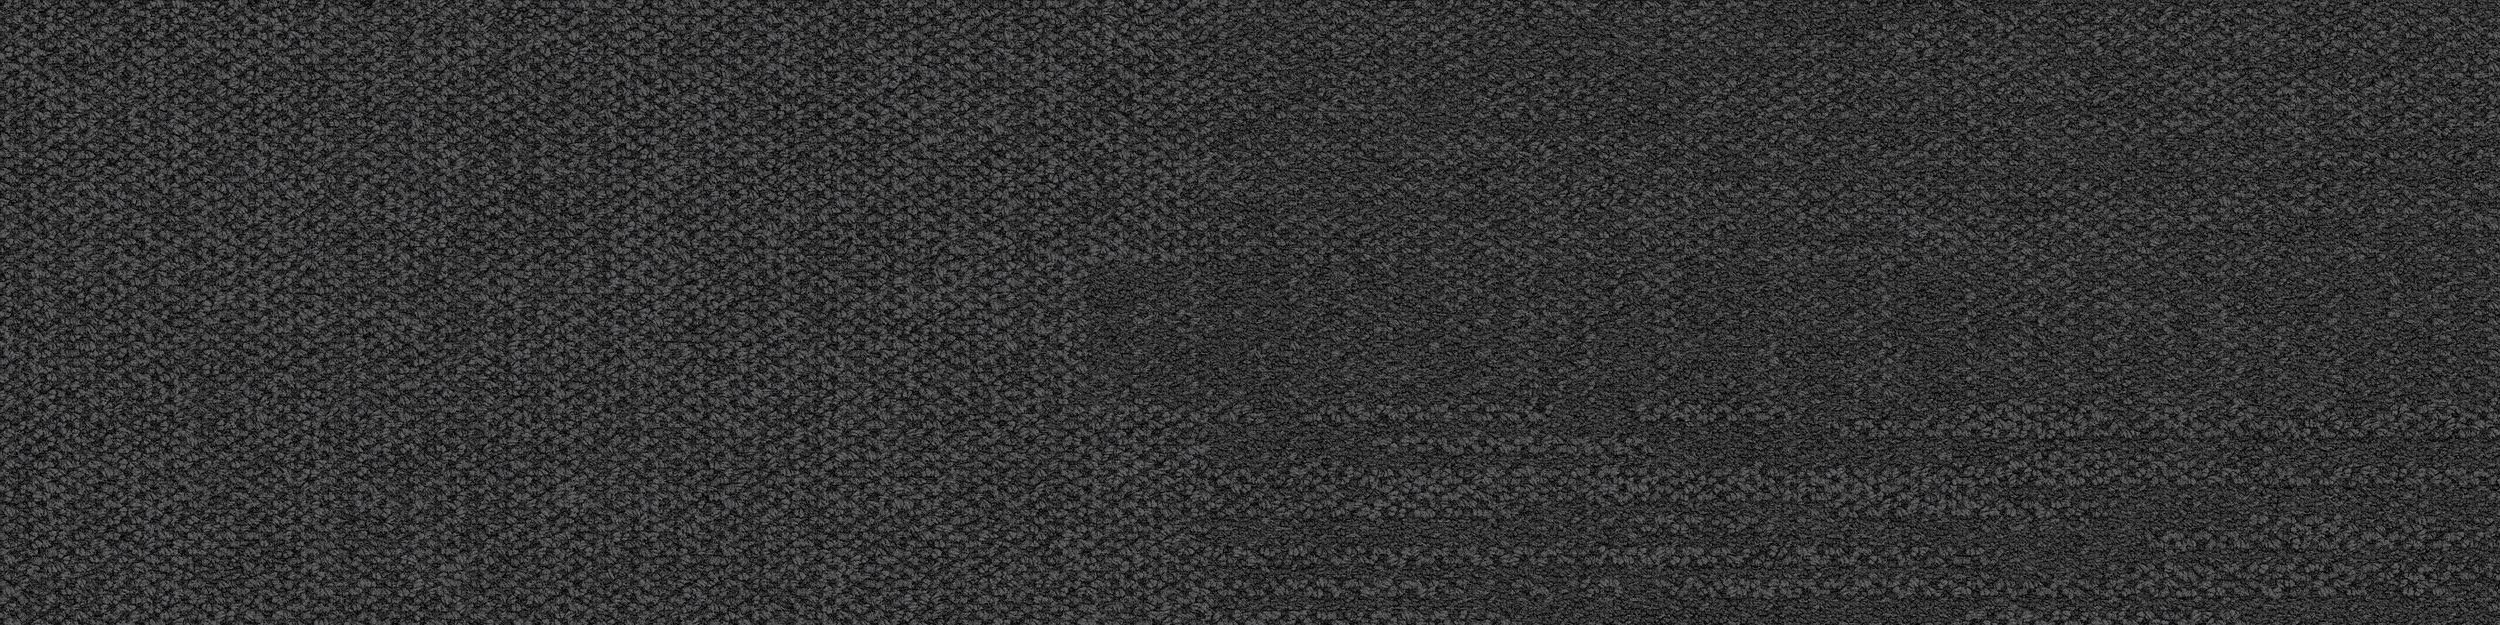 Verticals Carpet Tile In Zenith image number 2